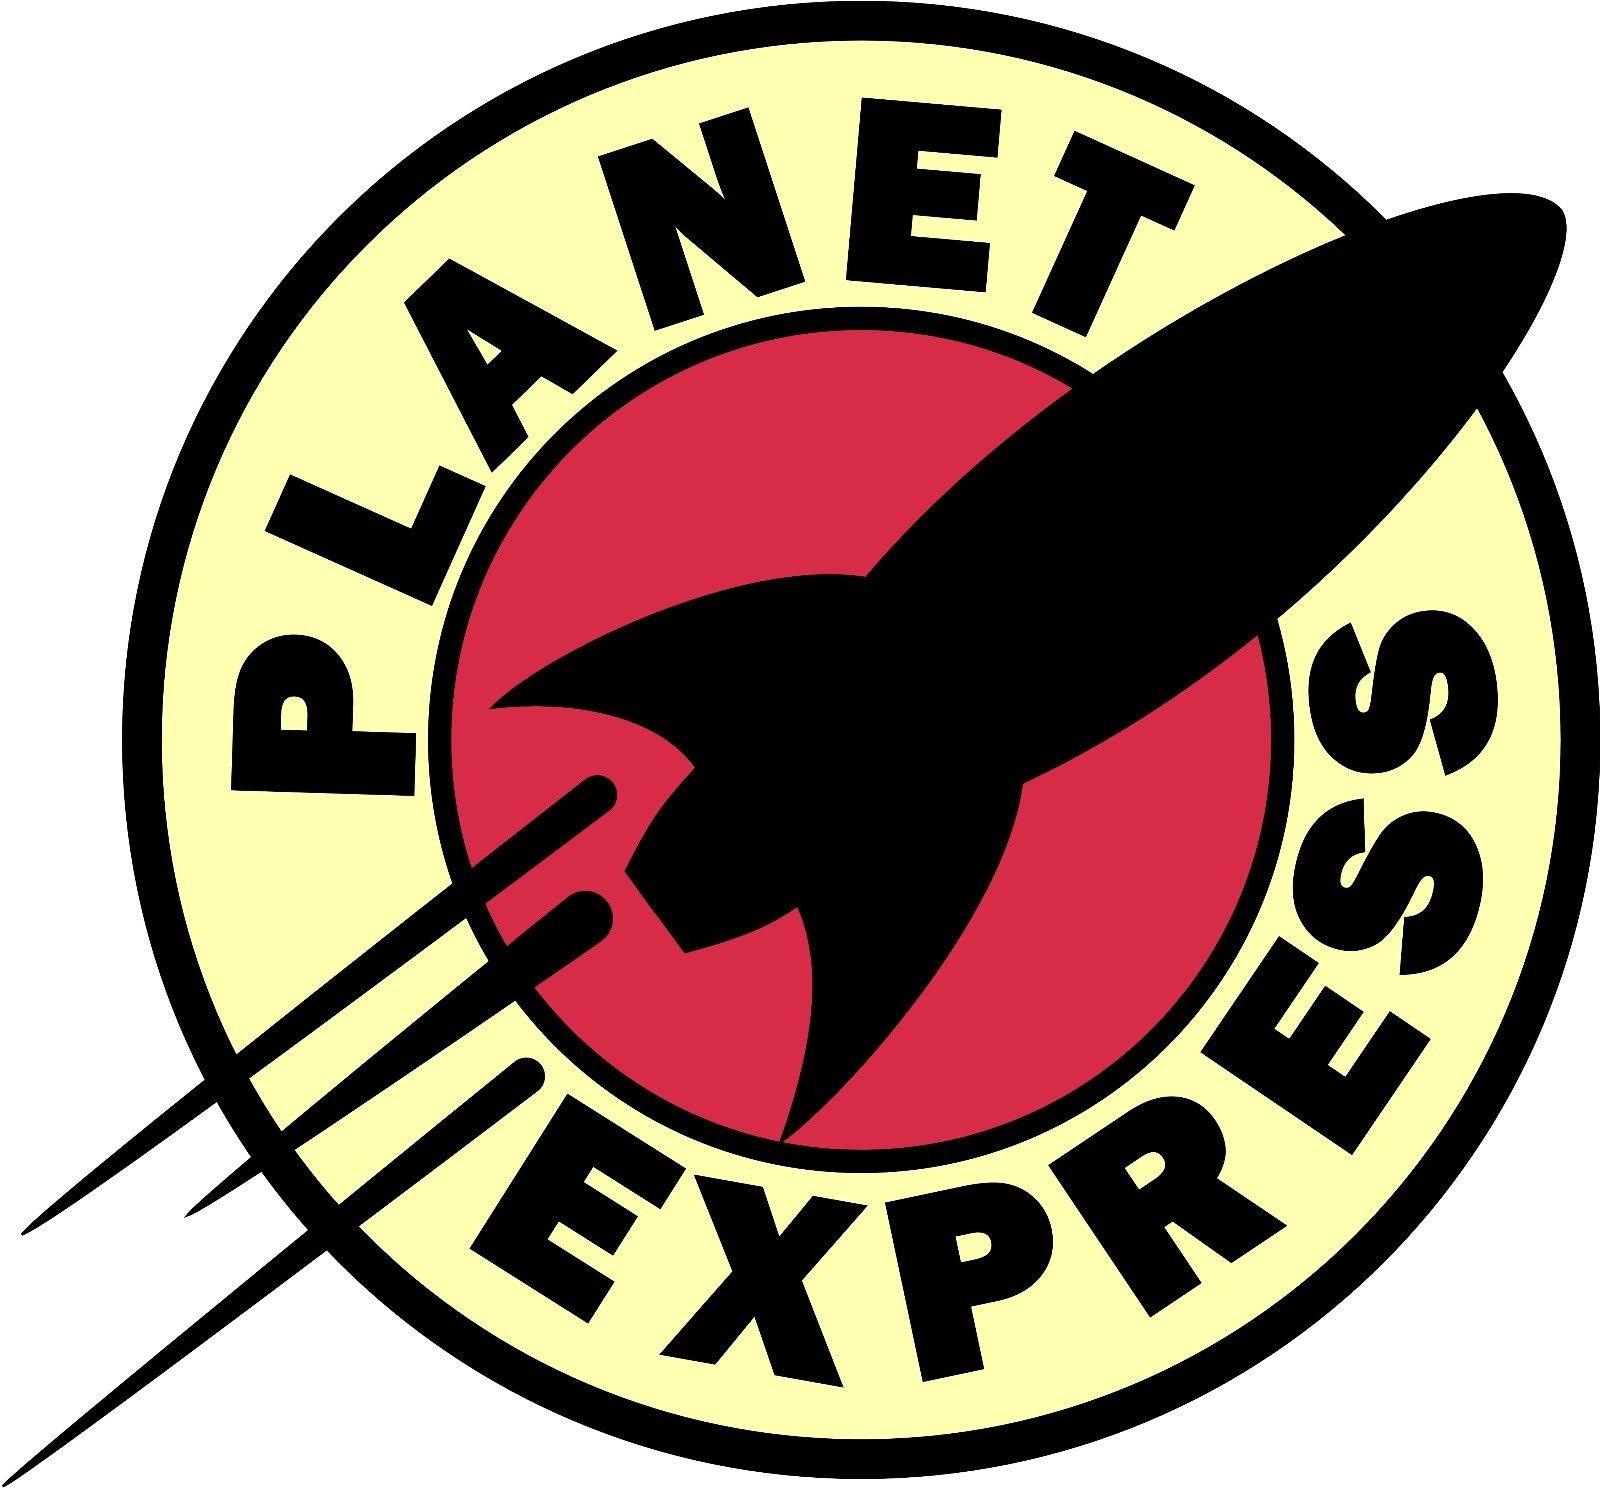 Planet Express Logo - Planet Express Futurama Logo Sticker Decal | eBay